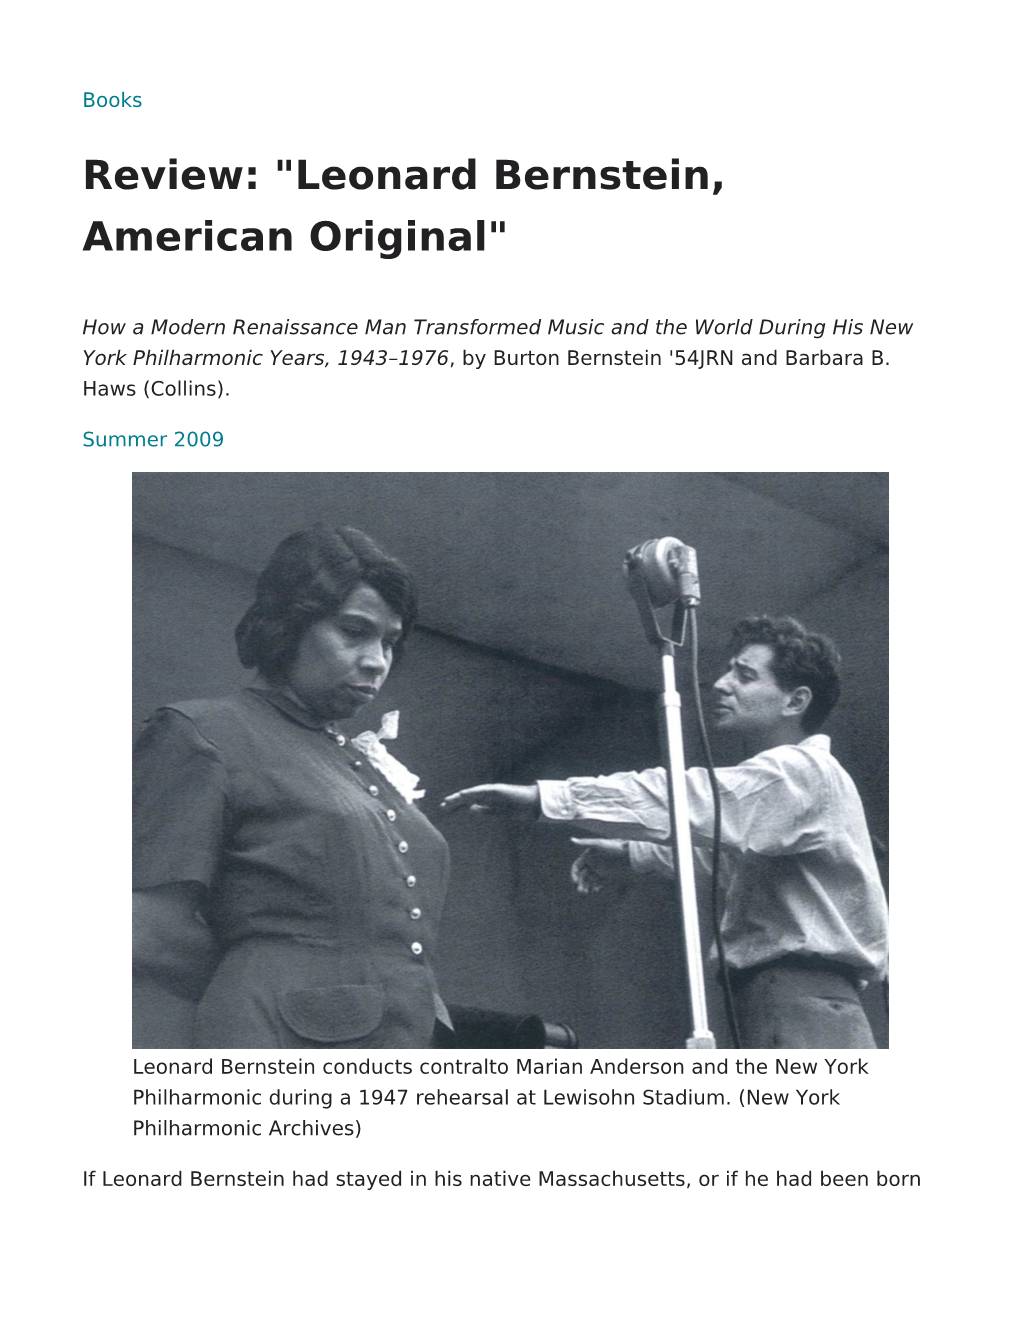 Leonard Bernstein, American Original"